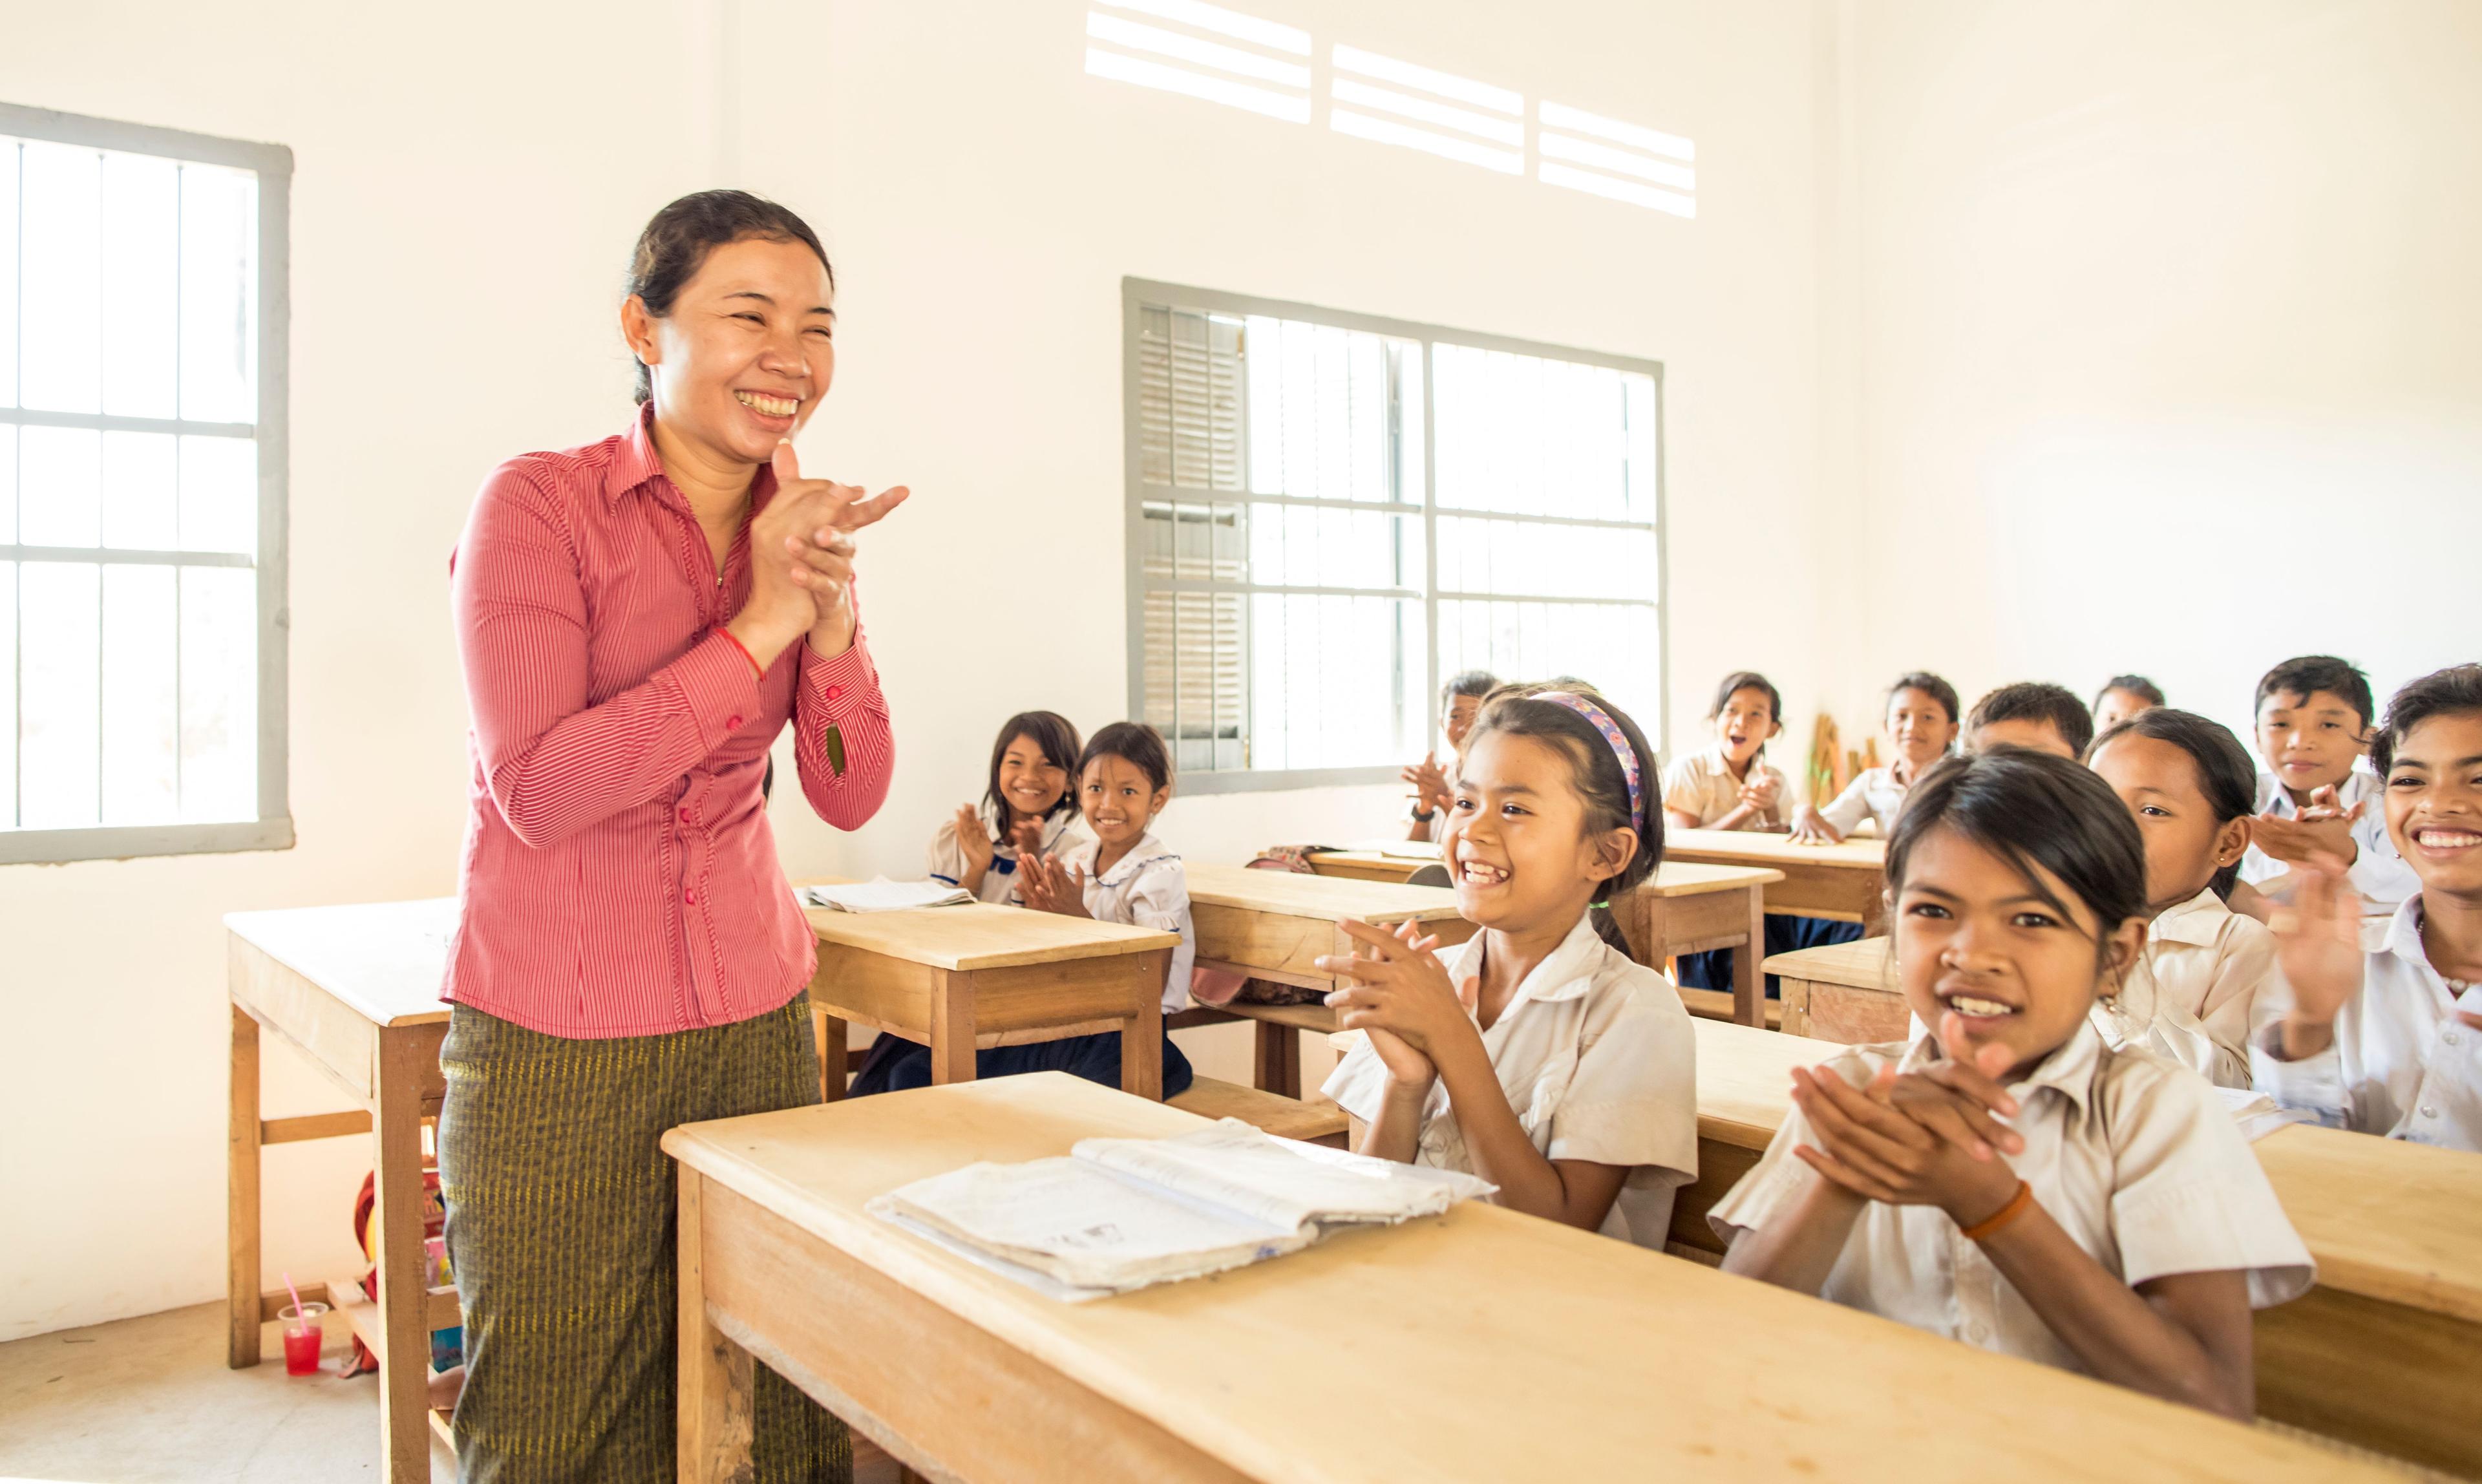 a&k philanthropy Schools in Cambodia